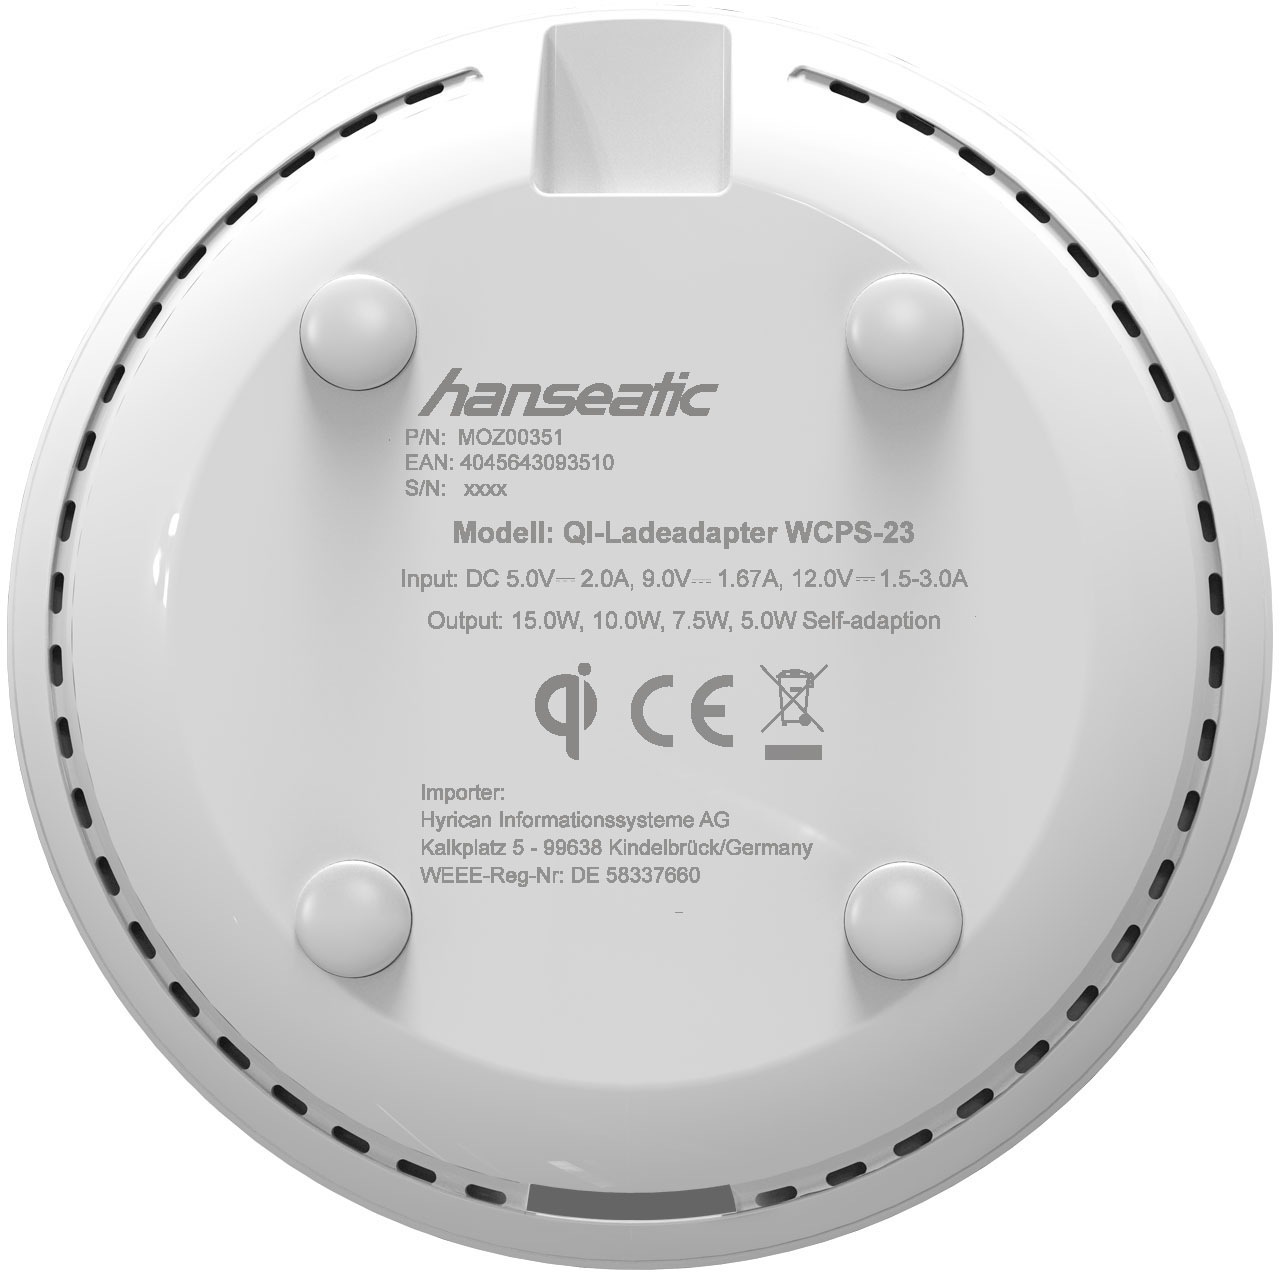 Hanseatic Smartphone-Ladegerät, USB Ladegerät und QI-Ladeadapter, 1,5m Kabellänge